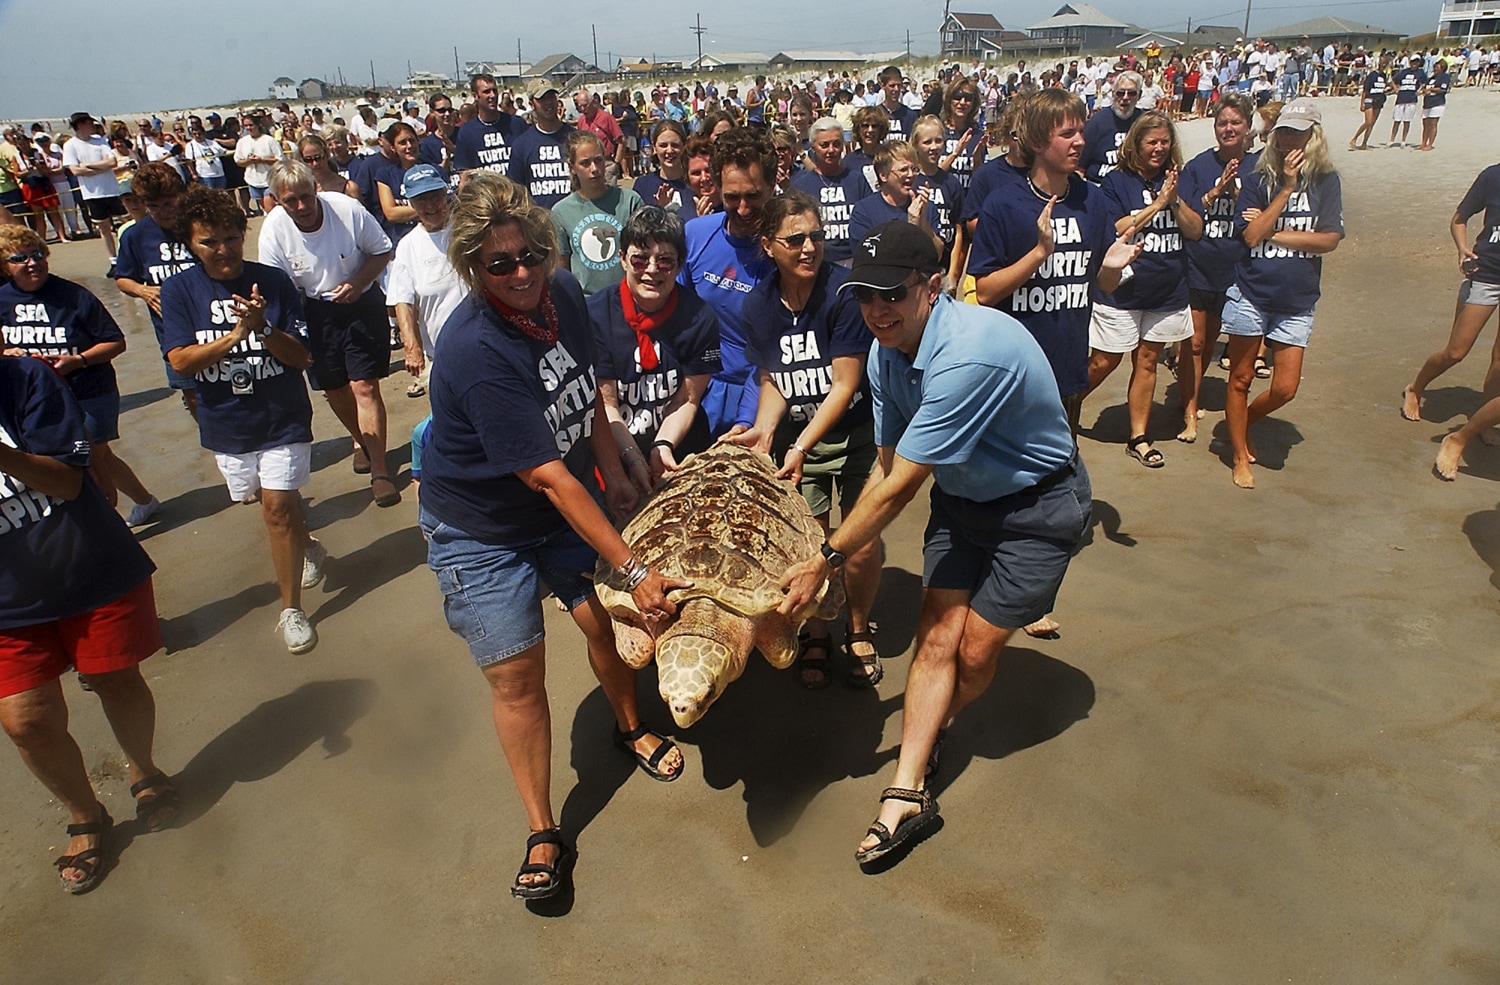 https://media-cldnry.s-nbcnews.com/image/upload/t_fit-1500w,f_auto,q_auto:best/newscms/2018_21/2445676/180525-sea-turtle-rehab-2004-ac-747p.jpg